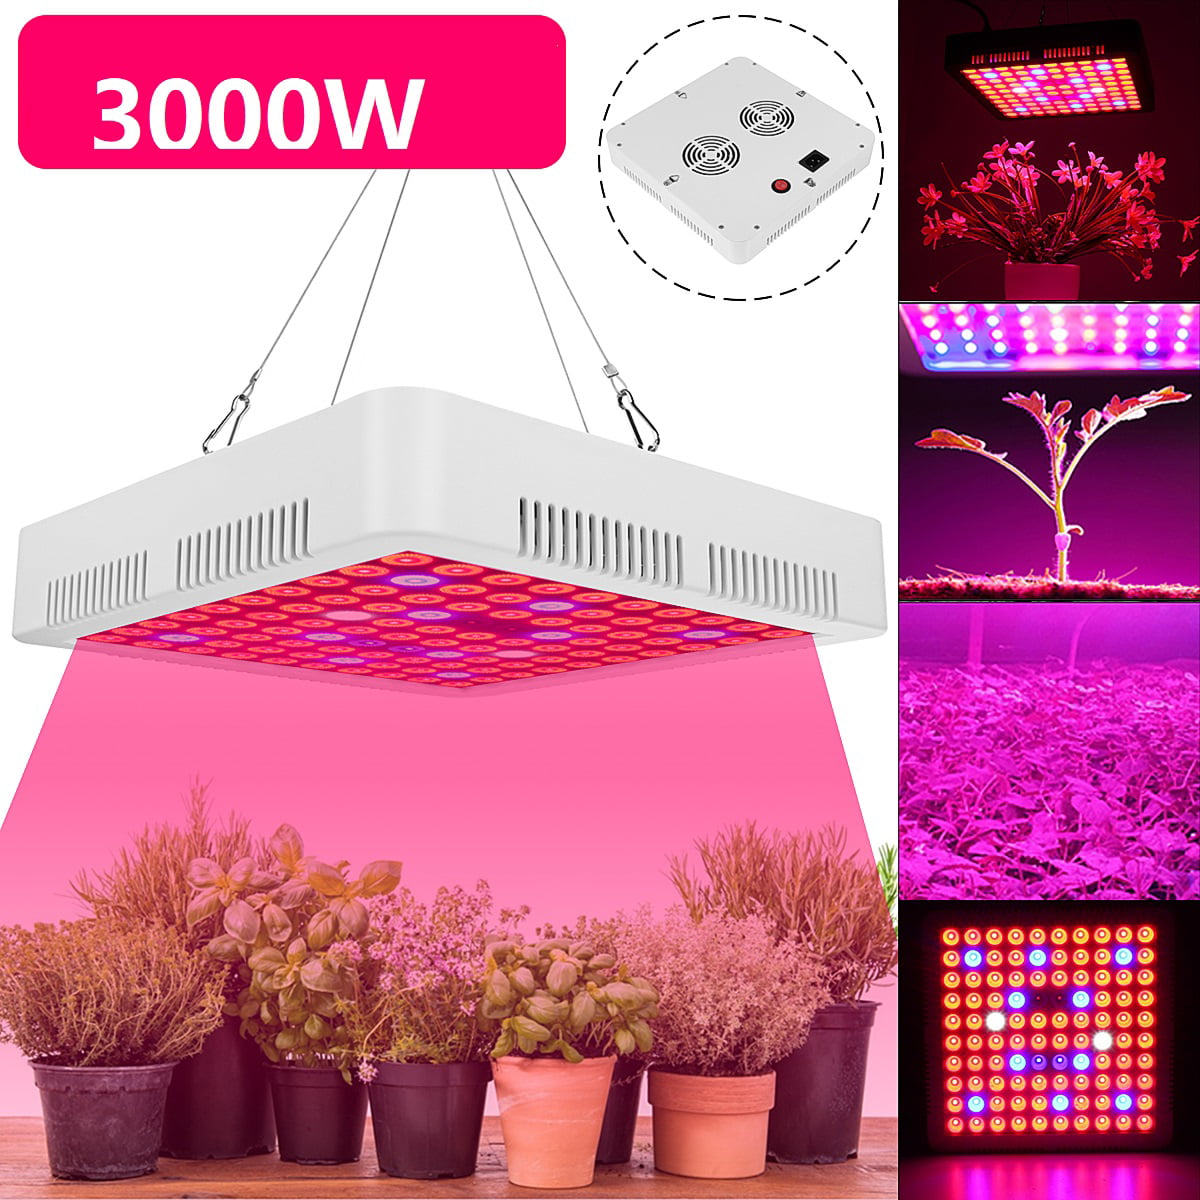 2000W Watt LED Grow Light Full Spectrum Lamp For Plants Hydroponics Flower Bloom 